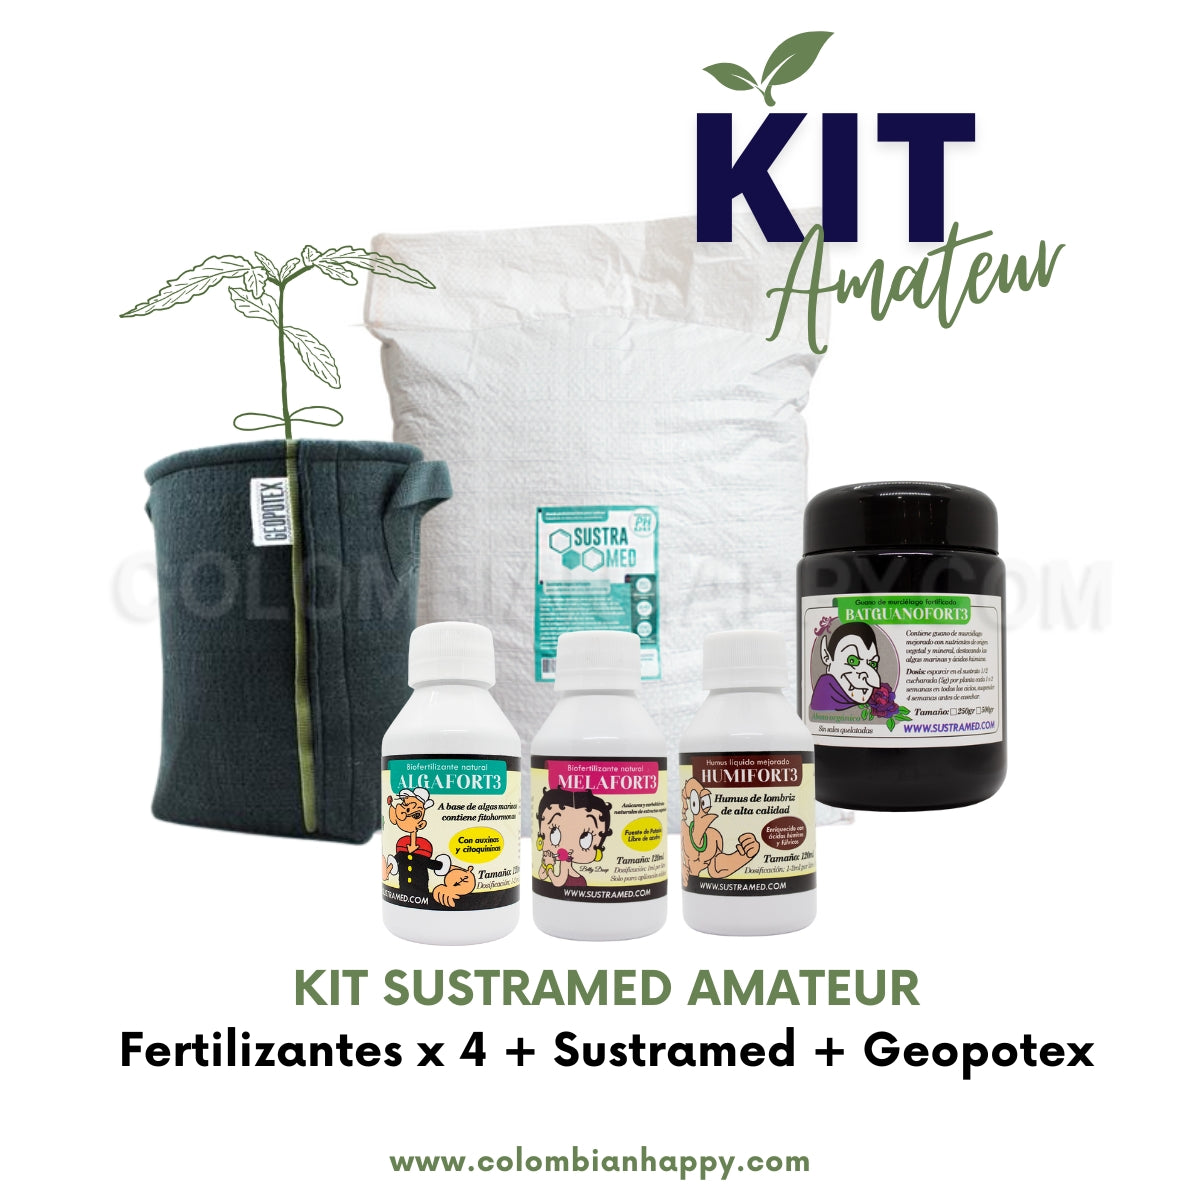 KIT SUSTRAMED AMATEUR - Fertilizantes x 4 + Sustramed + Geopotex